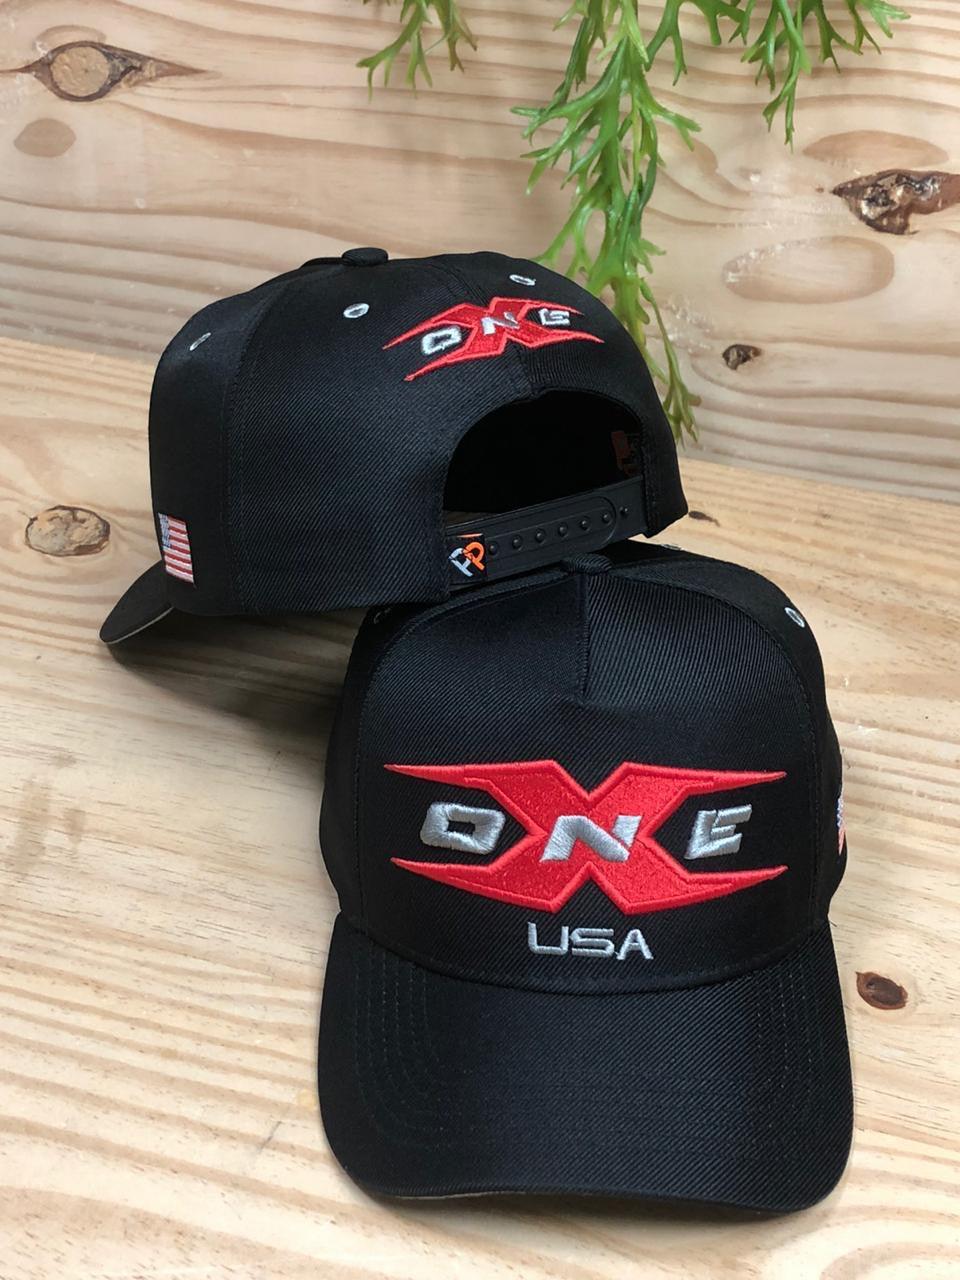 Hats - OneX USA